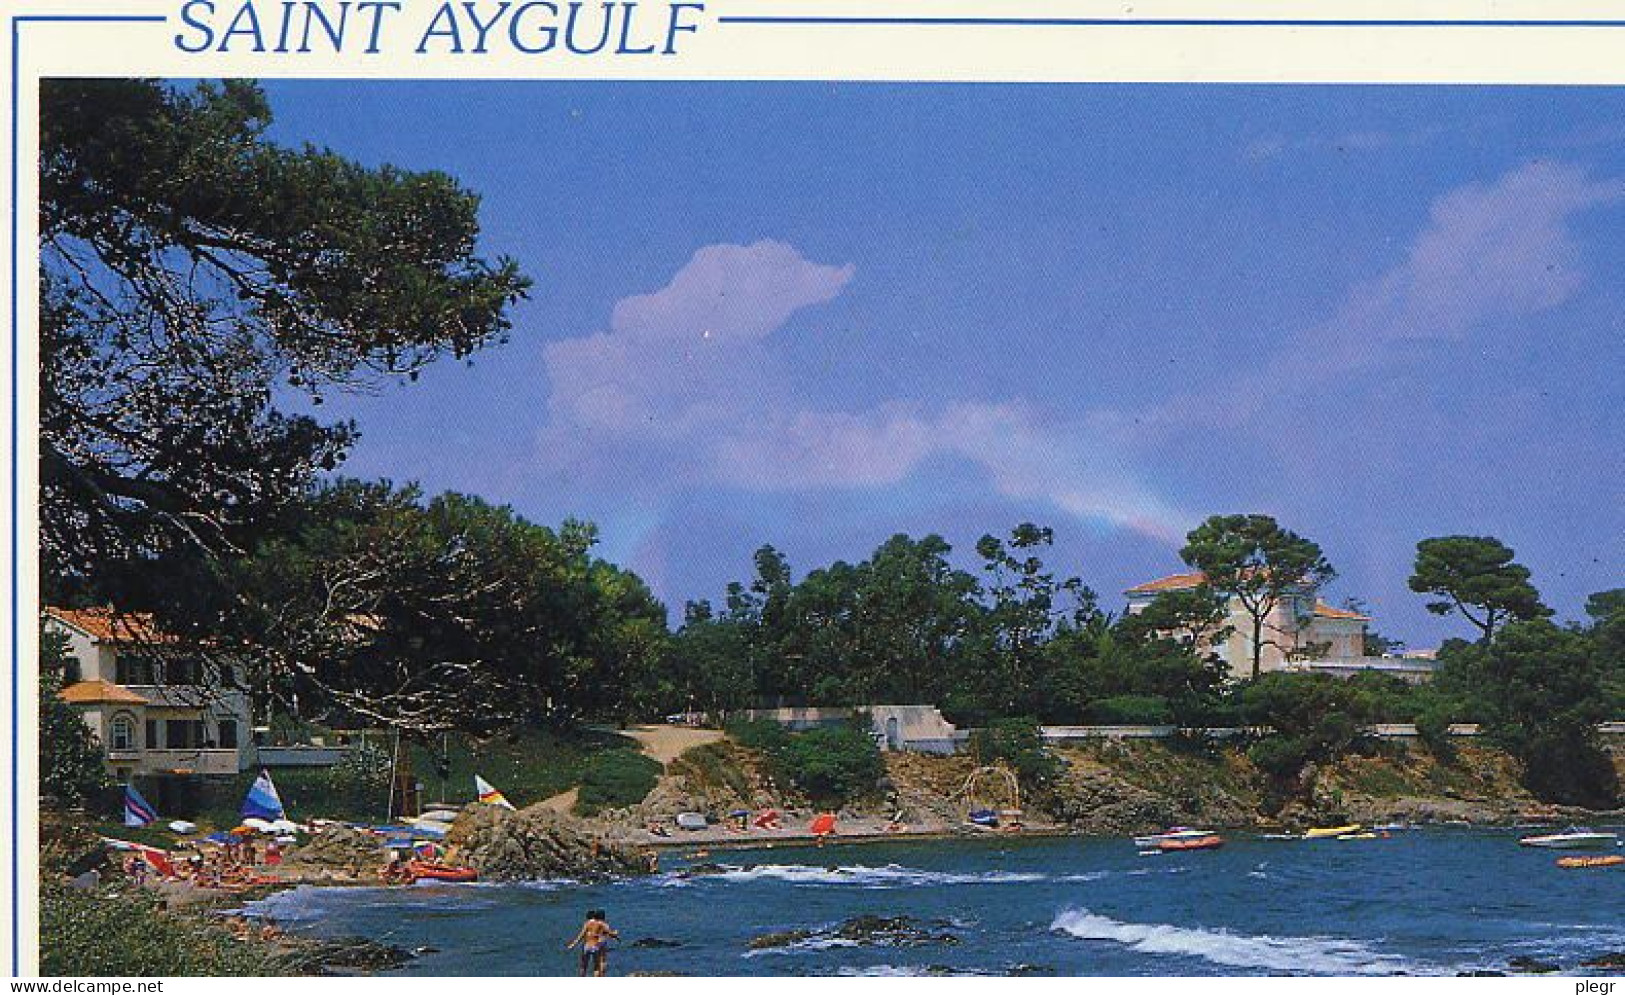 2-83061 02 13 - ST AYGULF - LA PLAGE DU PEBRIER - Saint-Aygulf